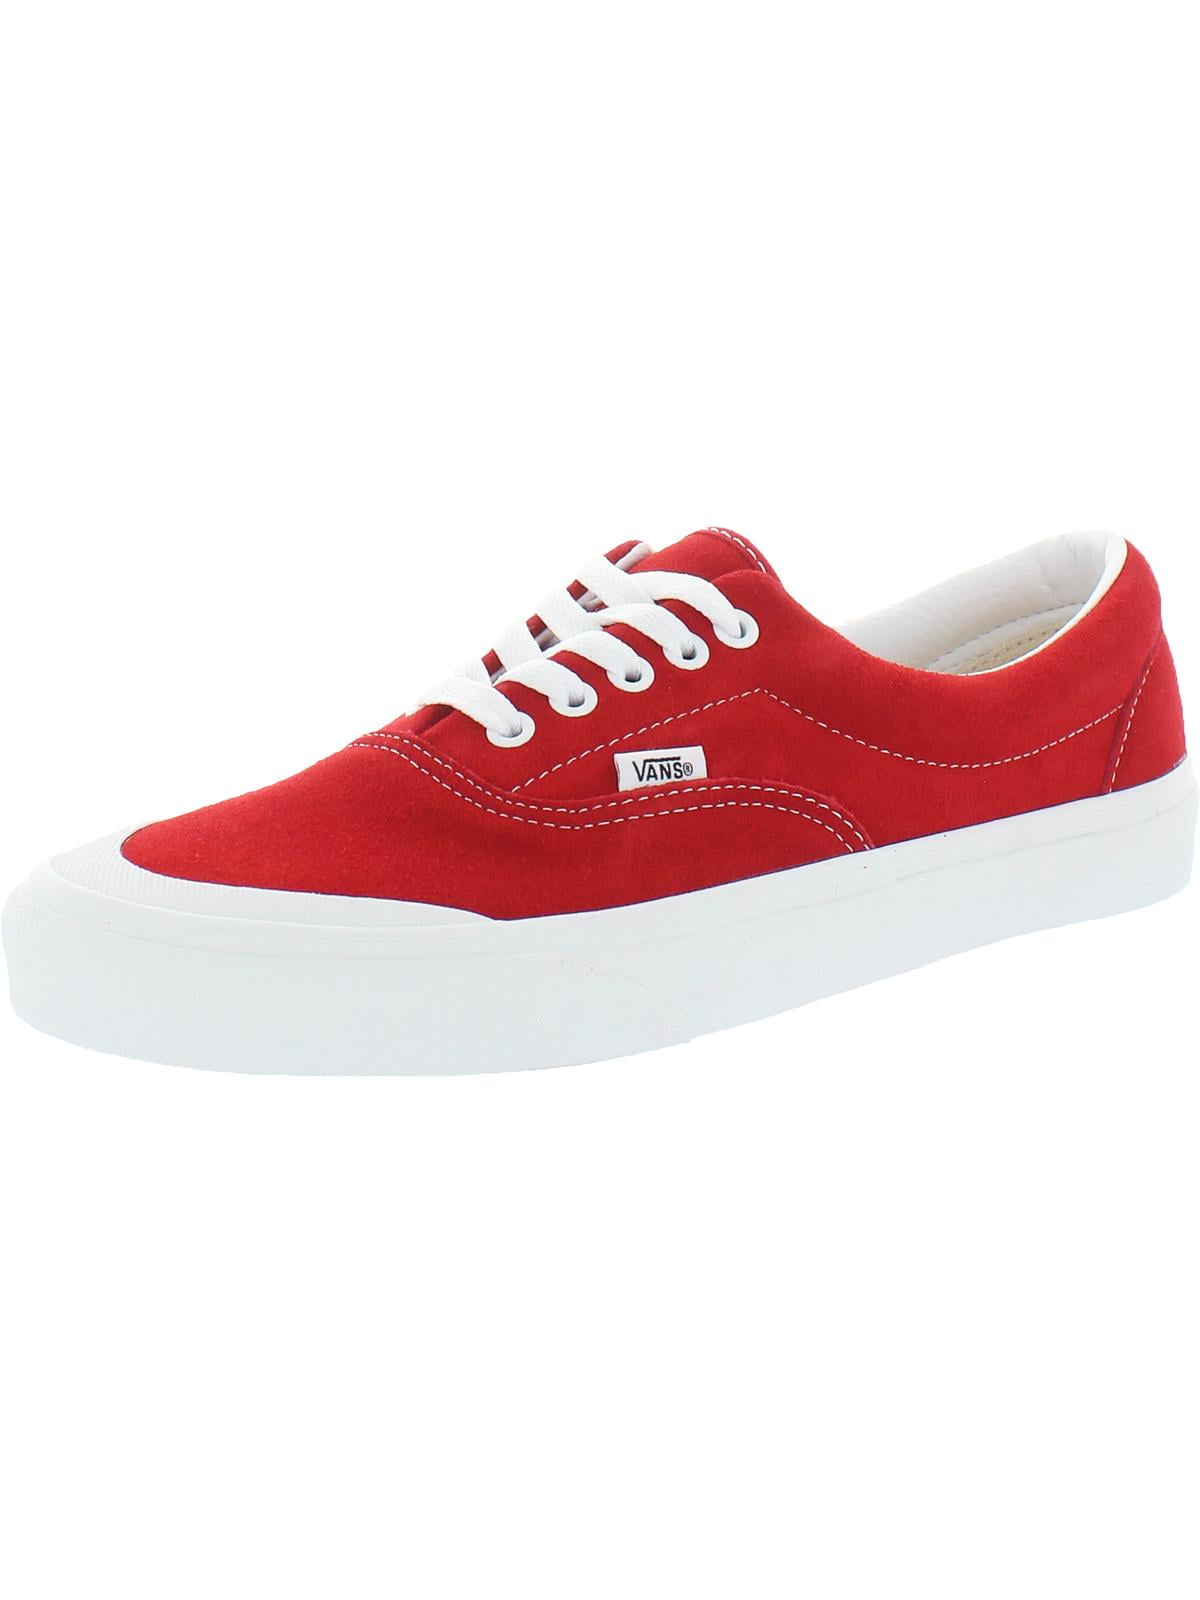 sædvanligt prins lindring Vans Era TC Men's Suede Low Top Lace-Up Sneakers Red Size 6.5 - Walmart.com